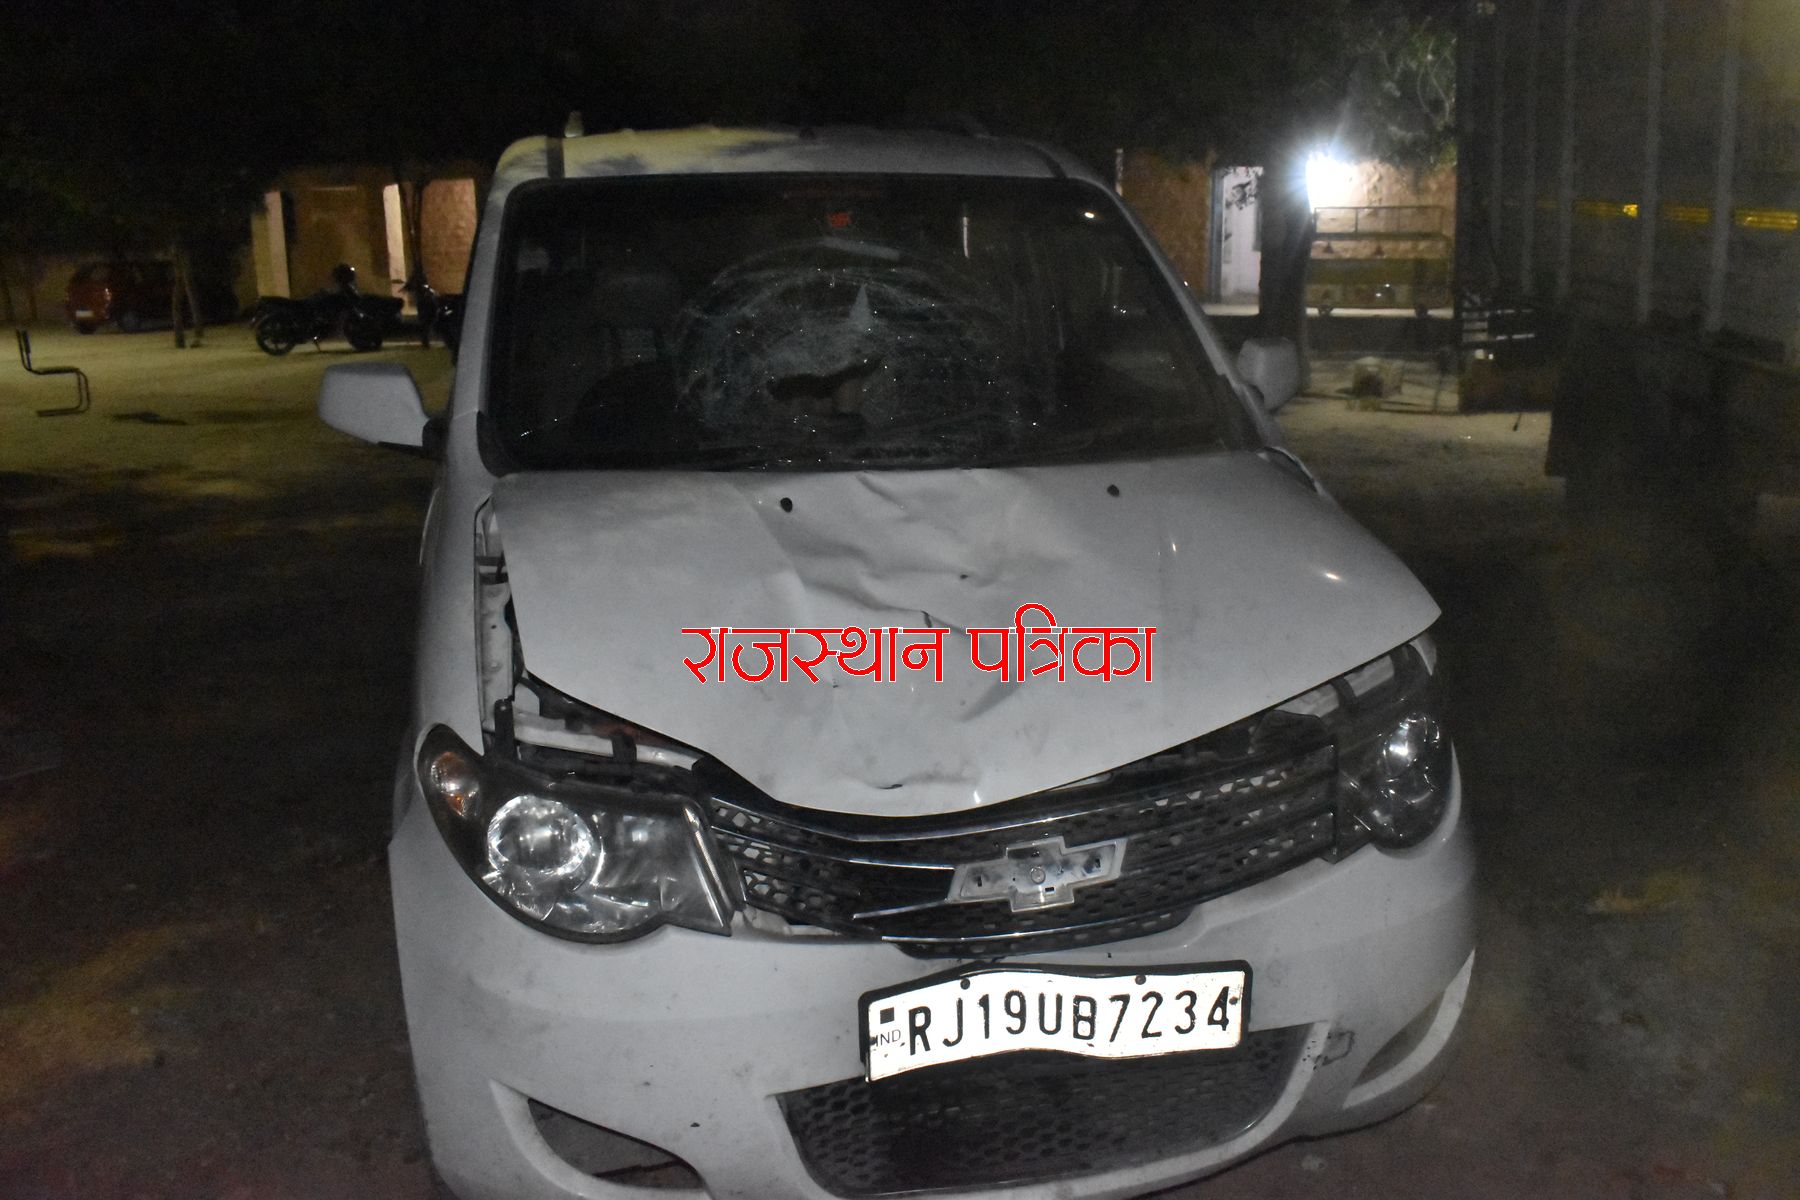 Car found in a garage in Jodhpur